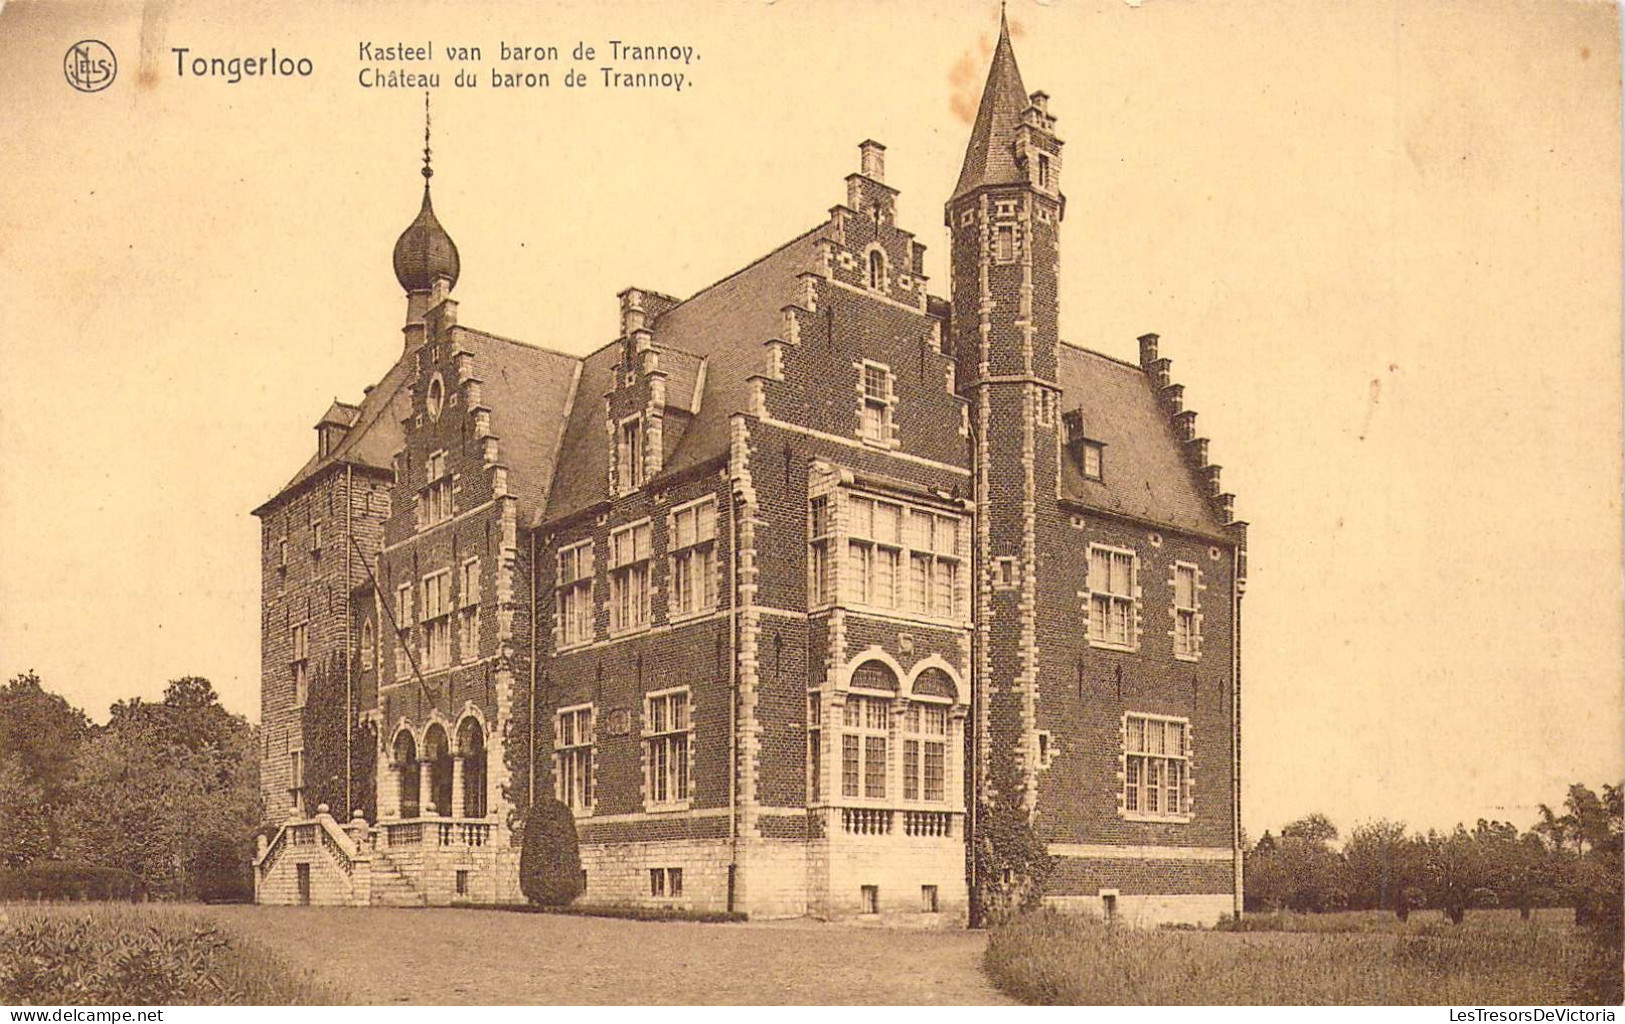 BELGIQUE - WESTERLOO - TONGERLOO - Château Du Baron De Trannoy - Carte Postale Ancienne - Westerlo